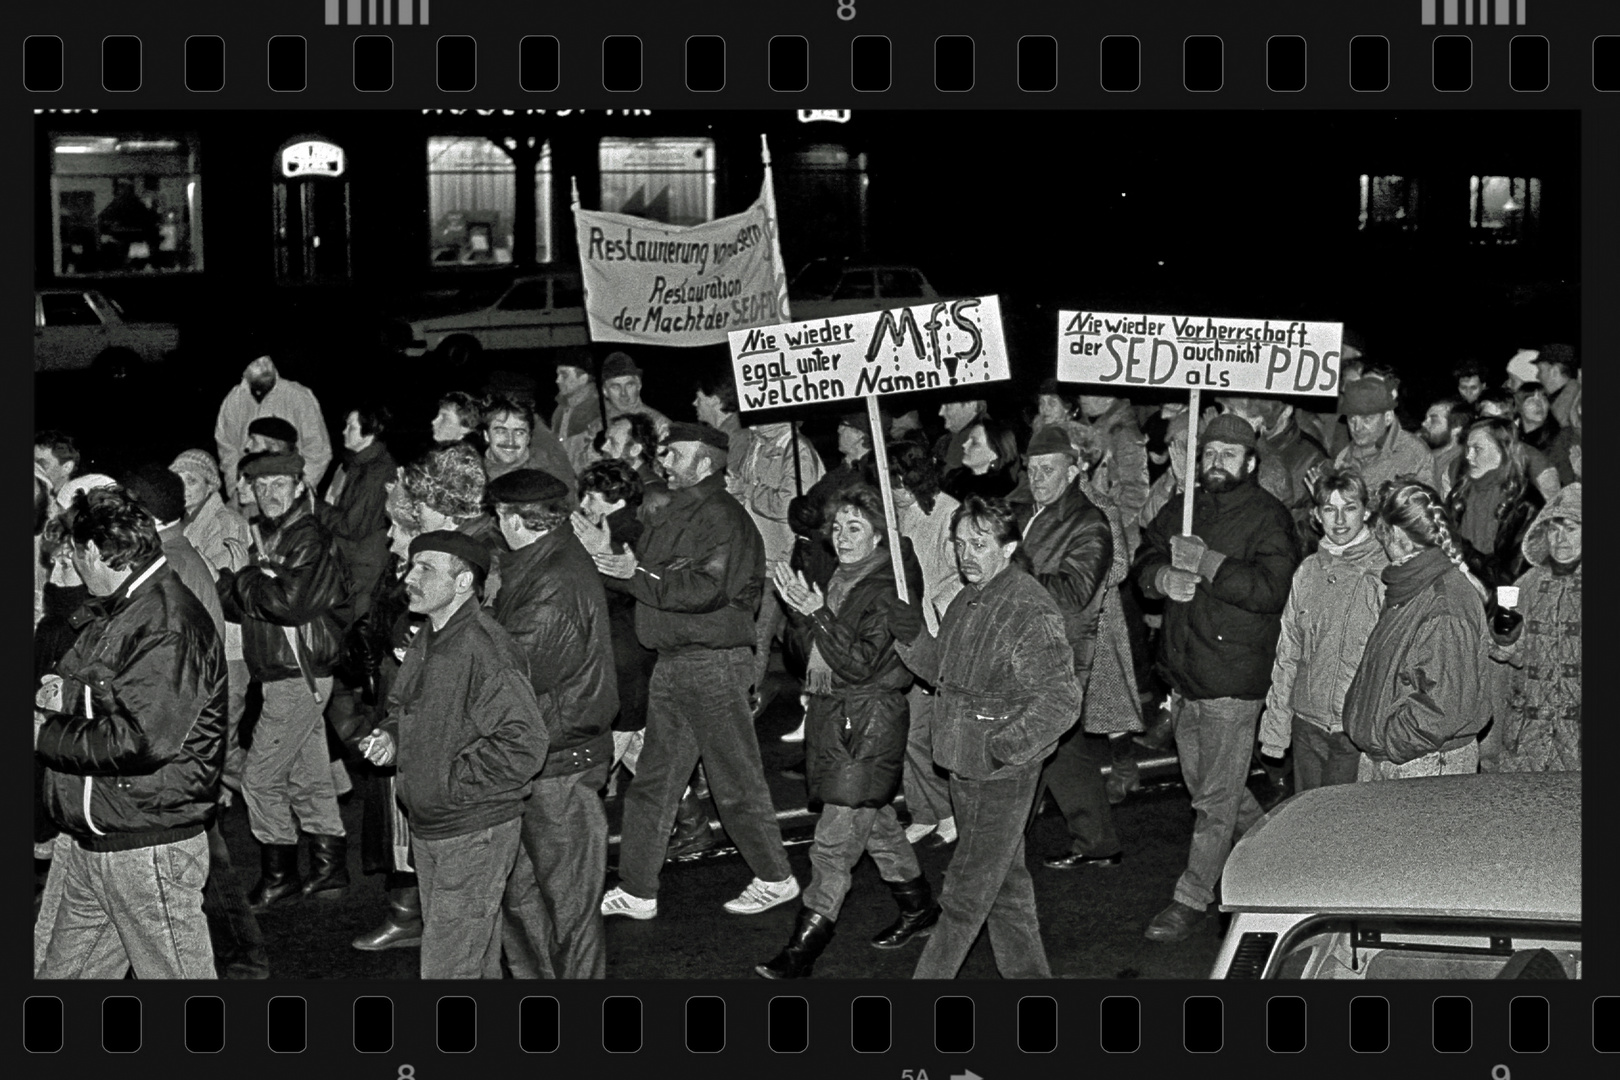 Rückblick: "Nie wieder MfS" forderten Demonstranten 1989 in Rostock